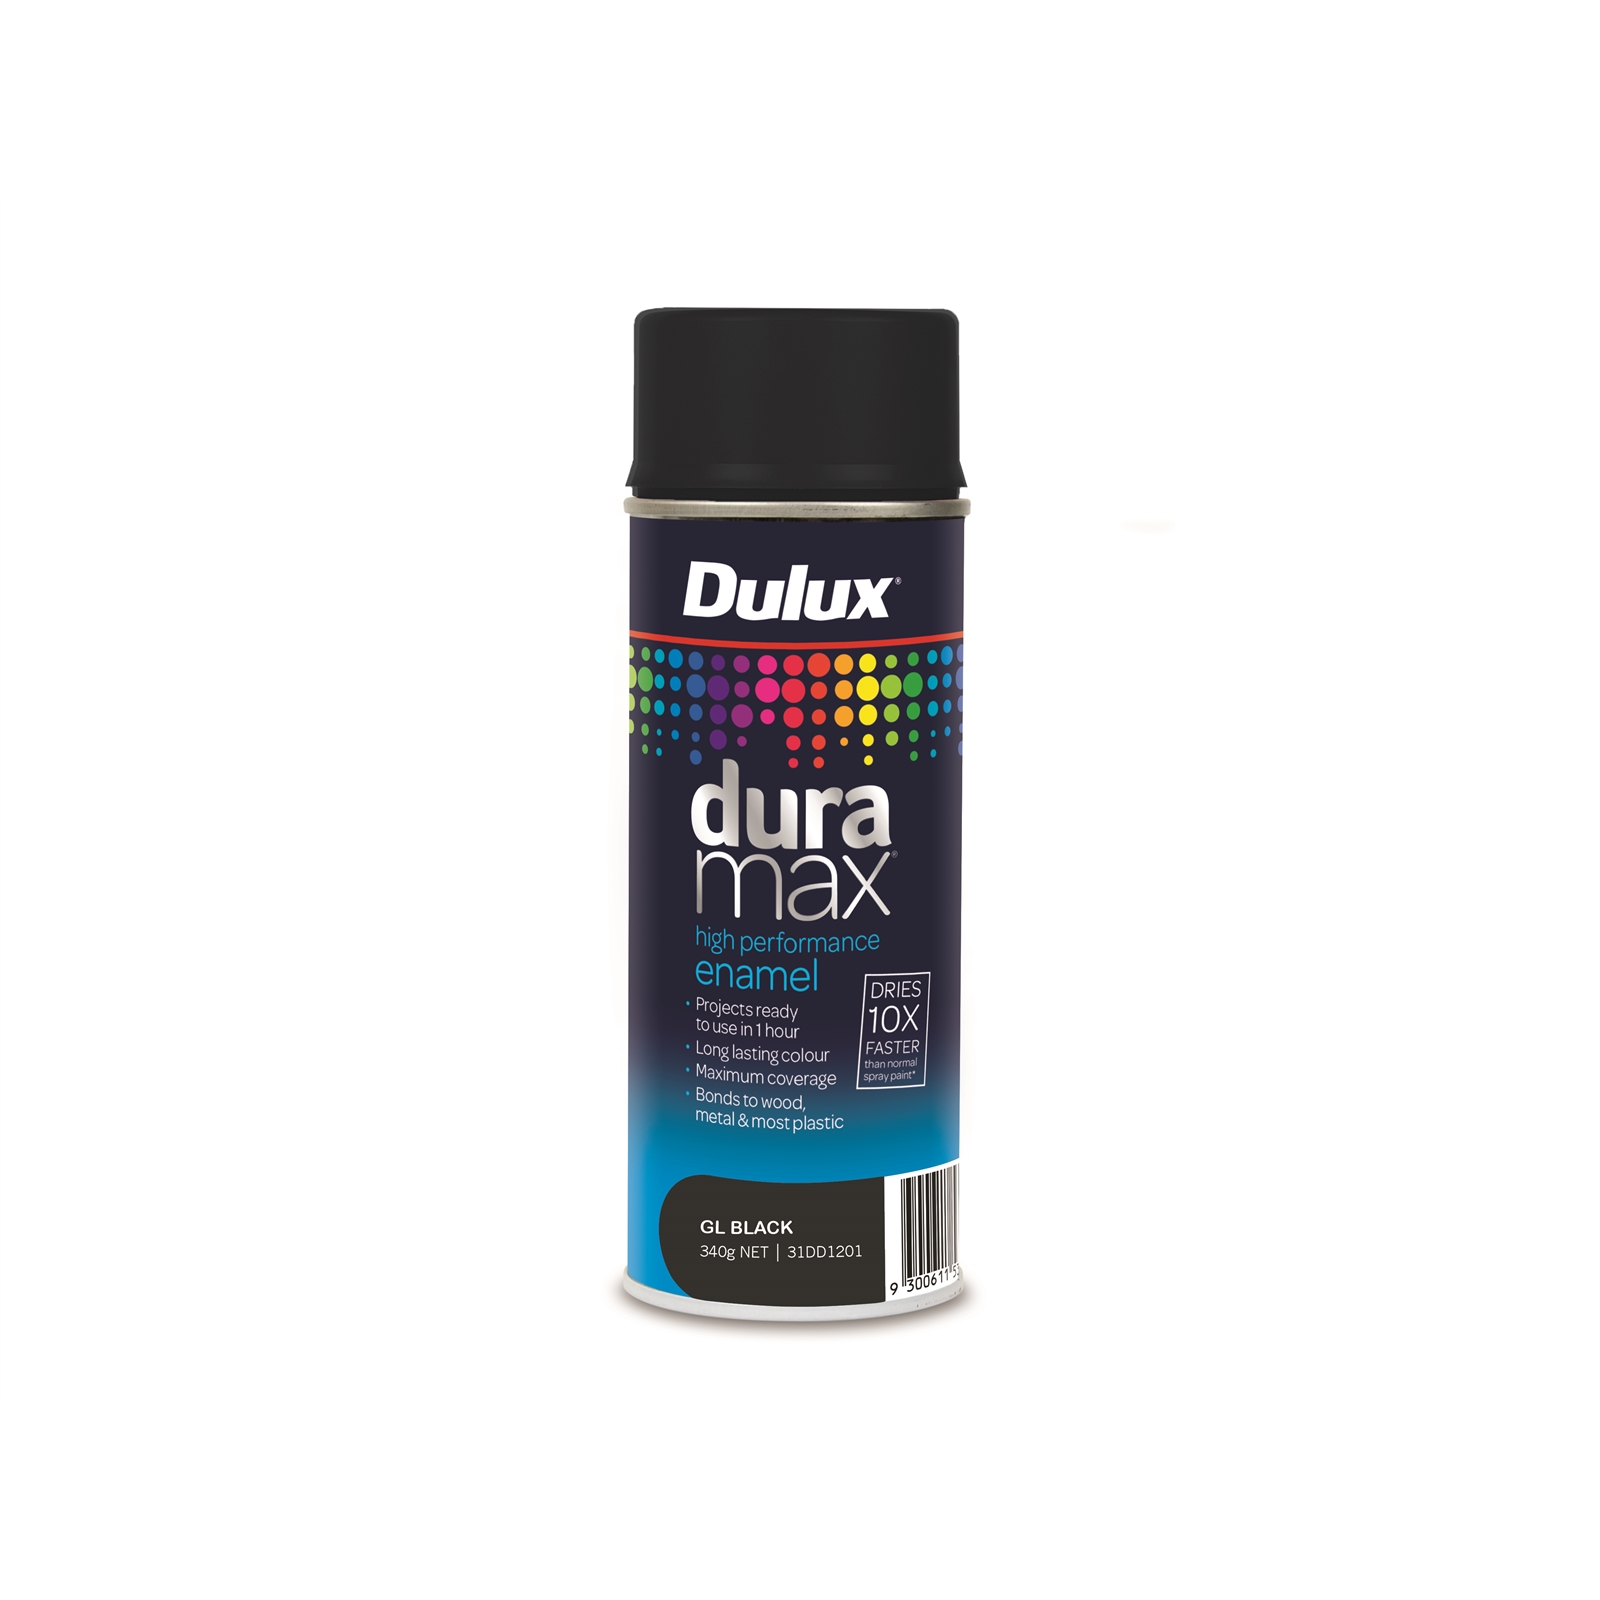 Dulux Duramax 340g Gloss Black Spray Paint